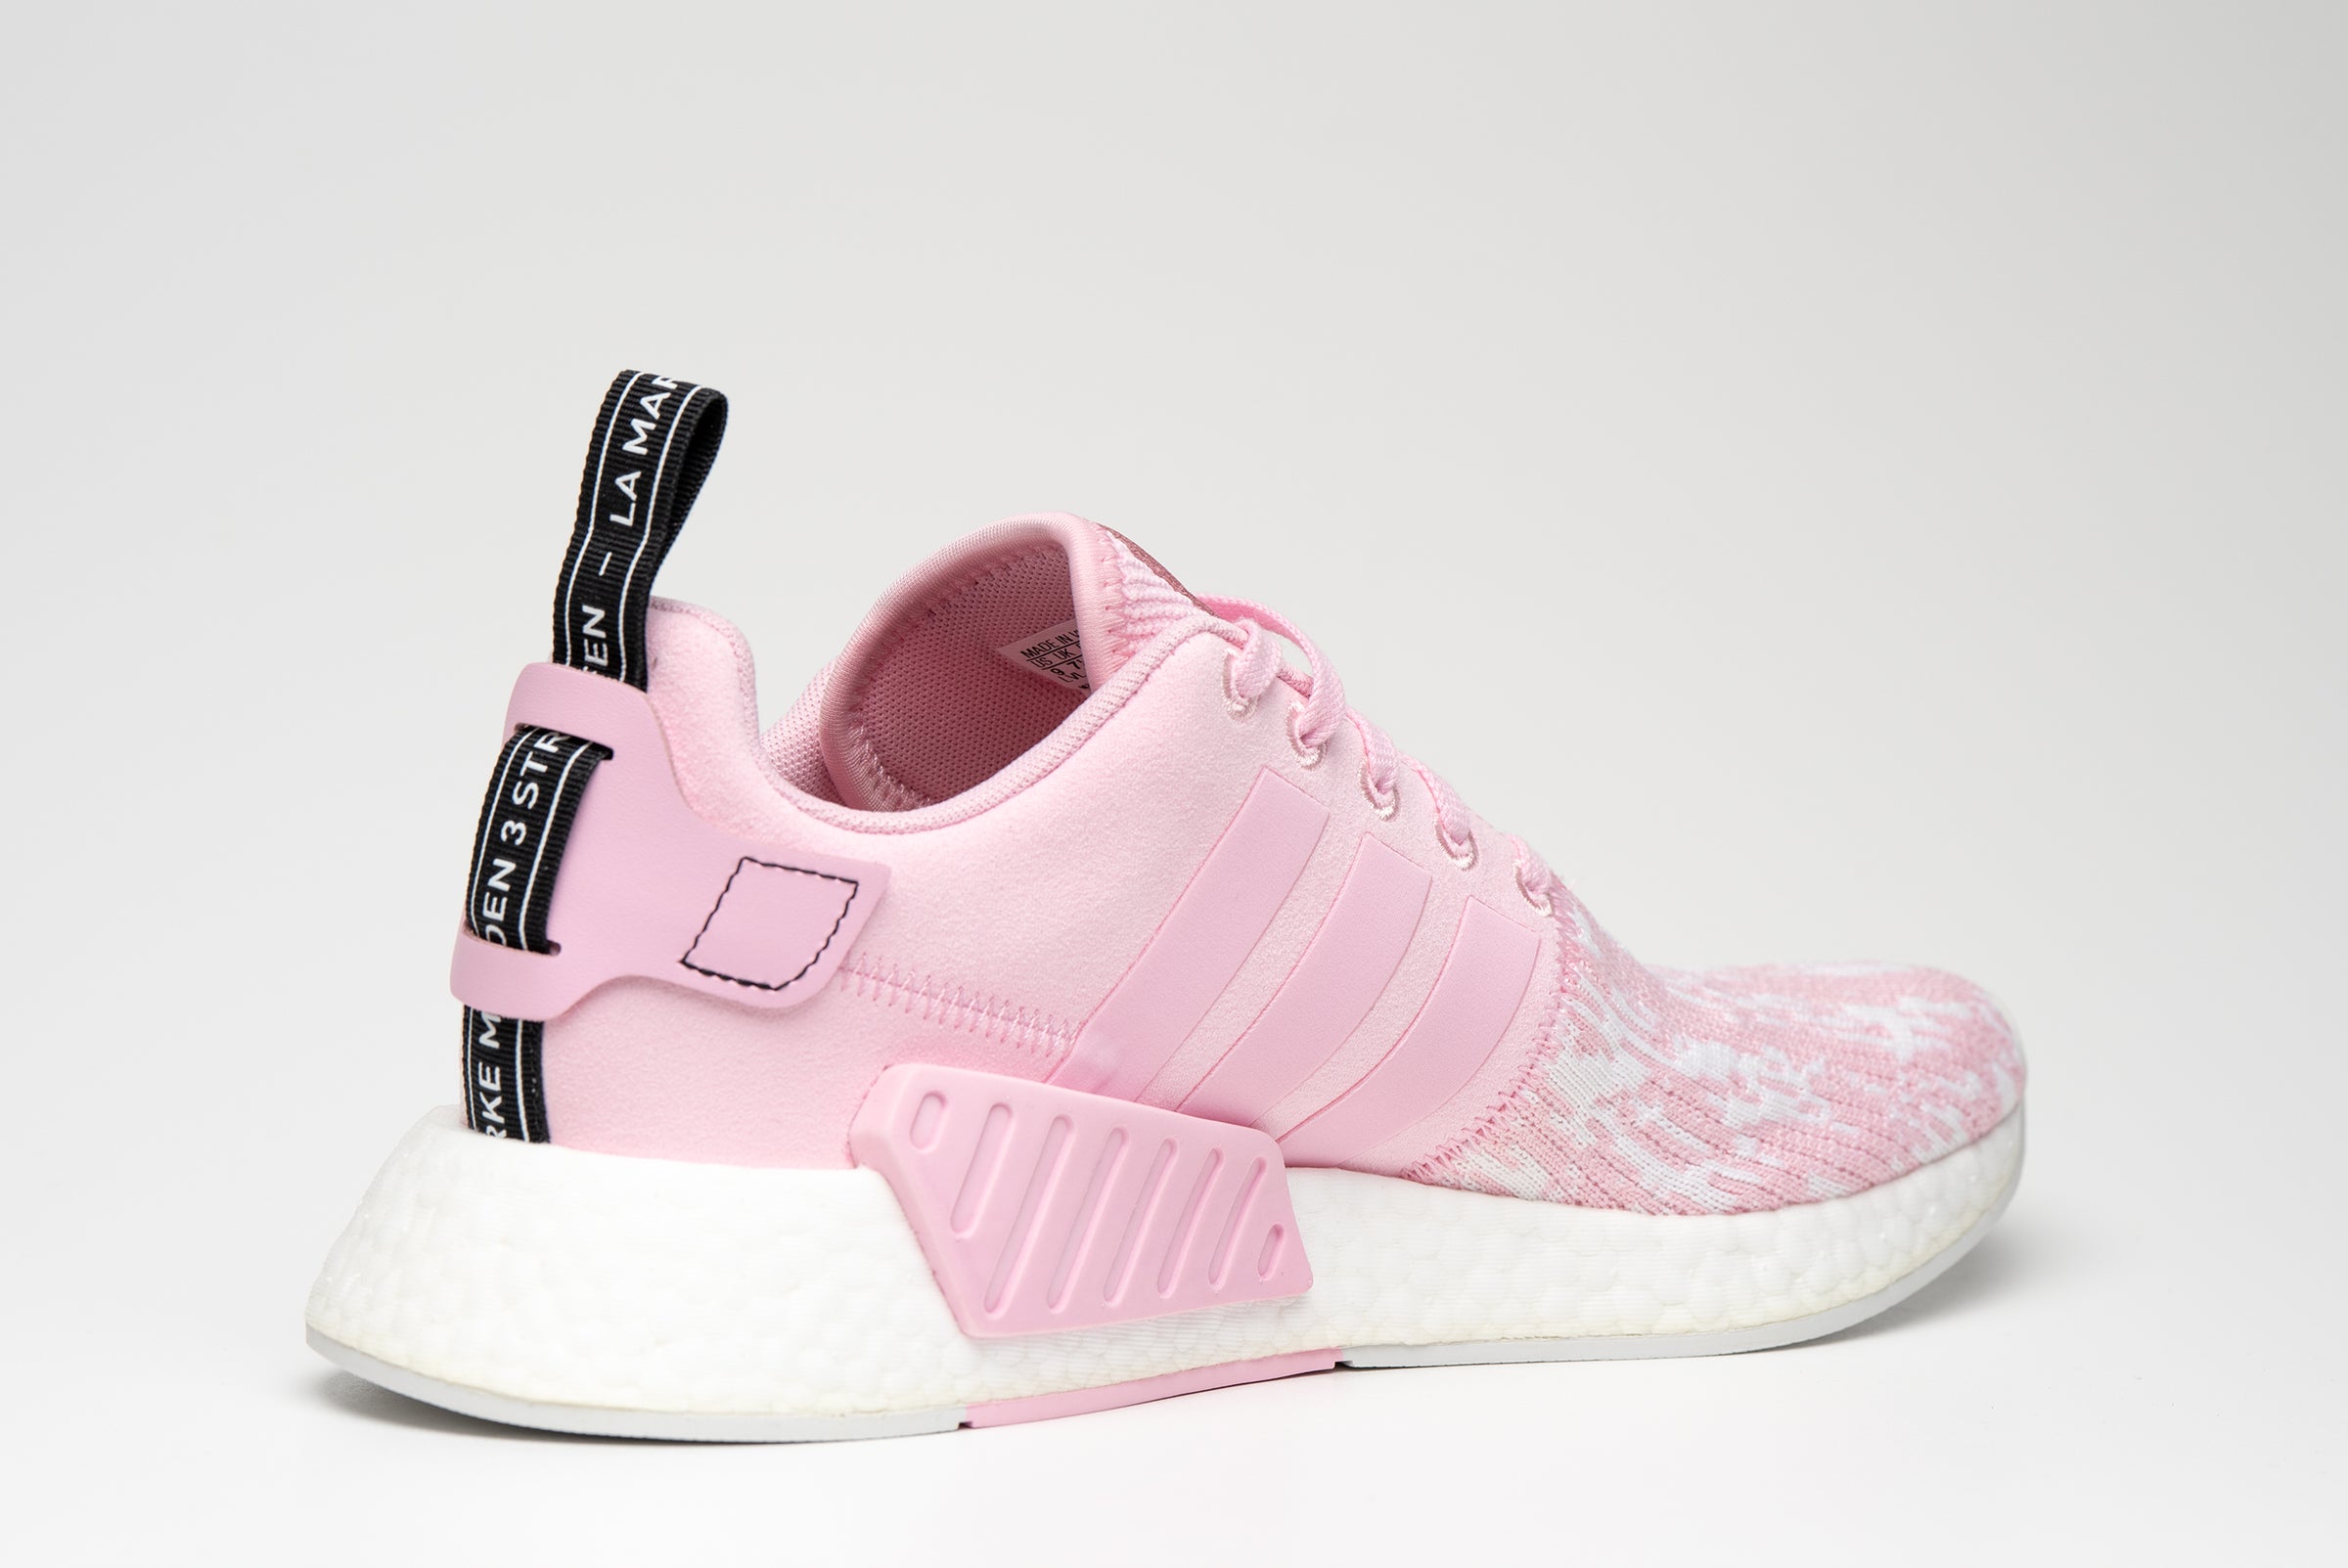 Adidas NMD R2 Primeknit Pink White | Shoes